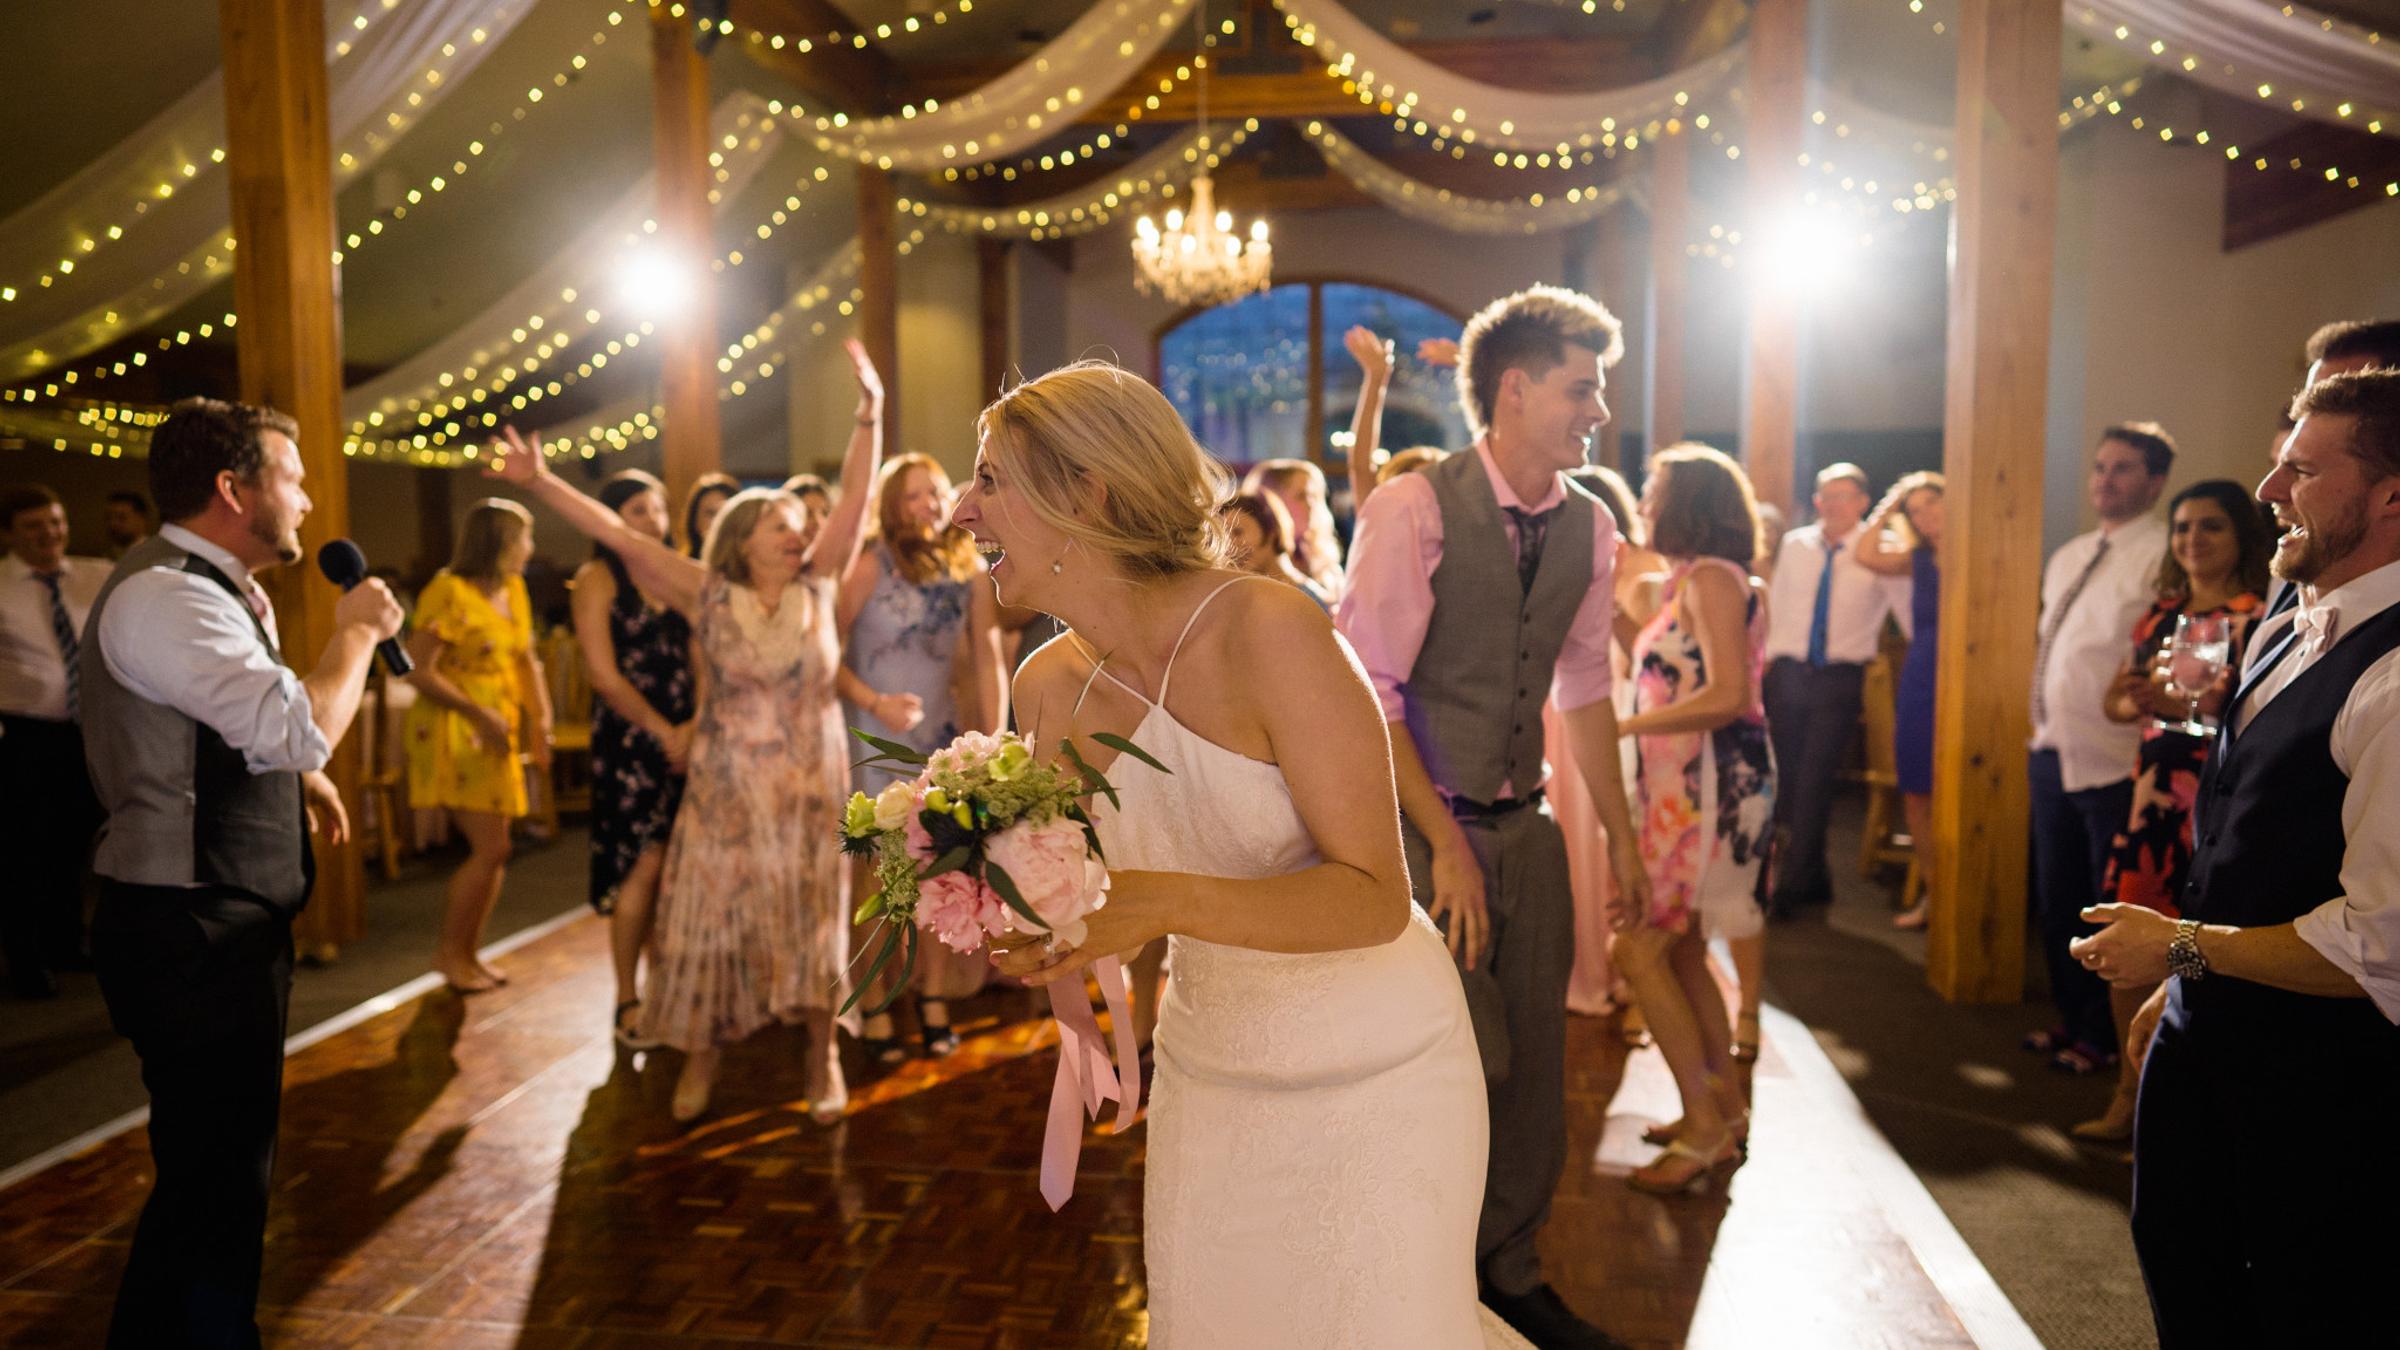 Wedding Dance Floor inside Last Chance Lodge